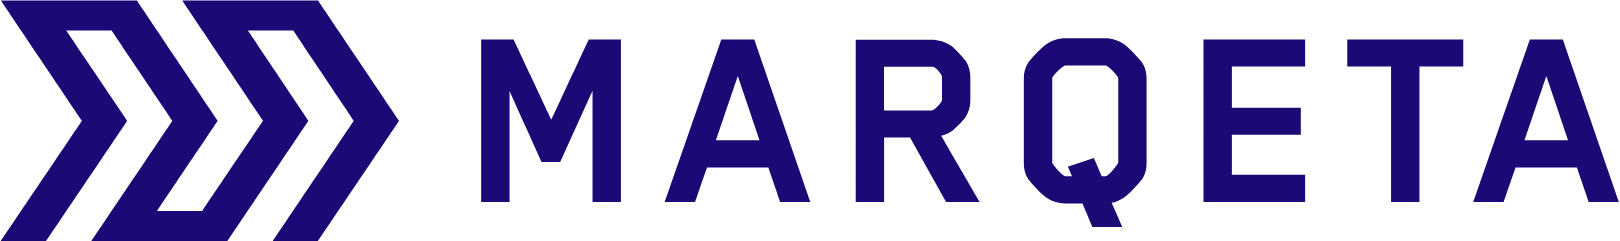 Marqeta logo large (transparent PNG)